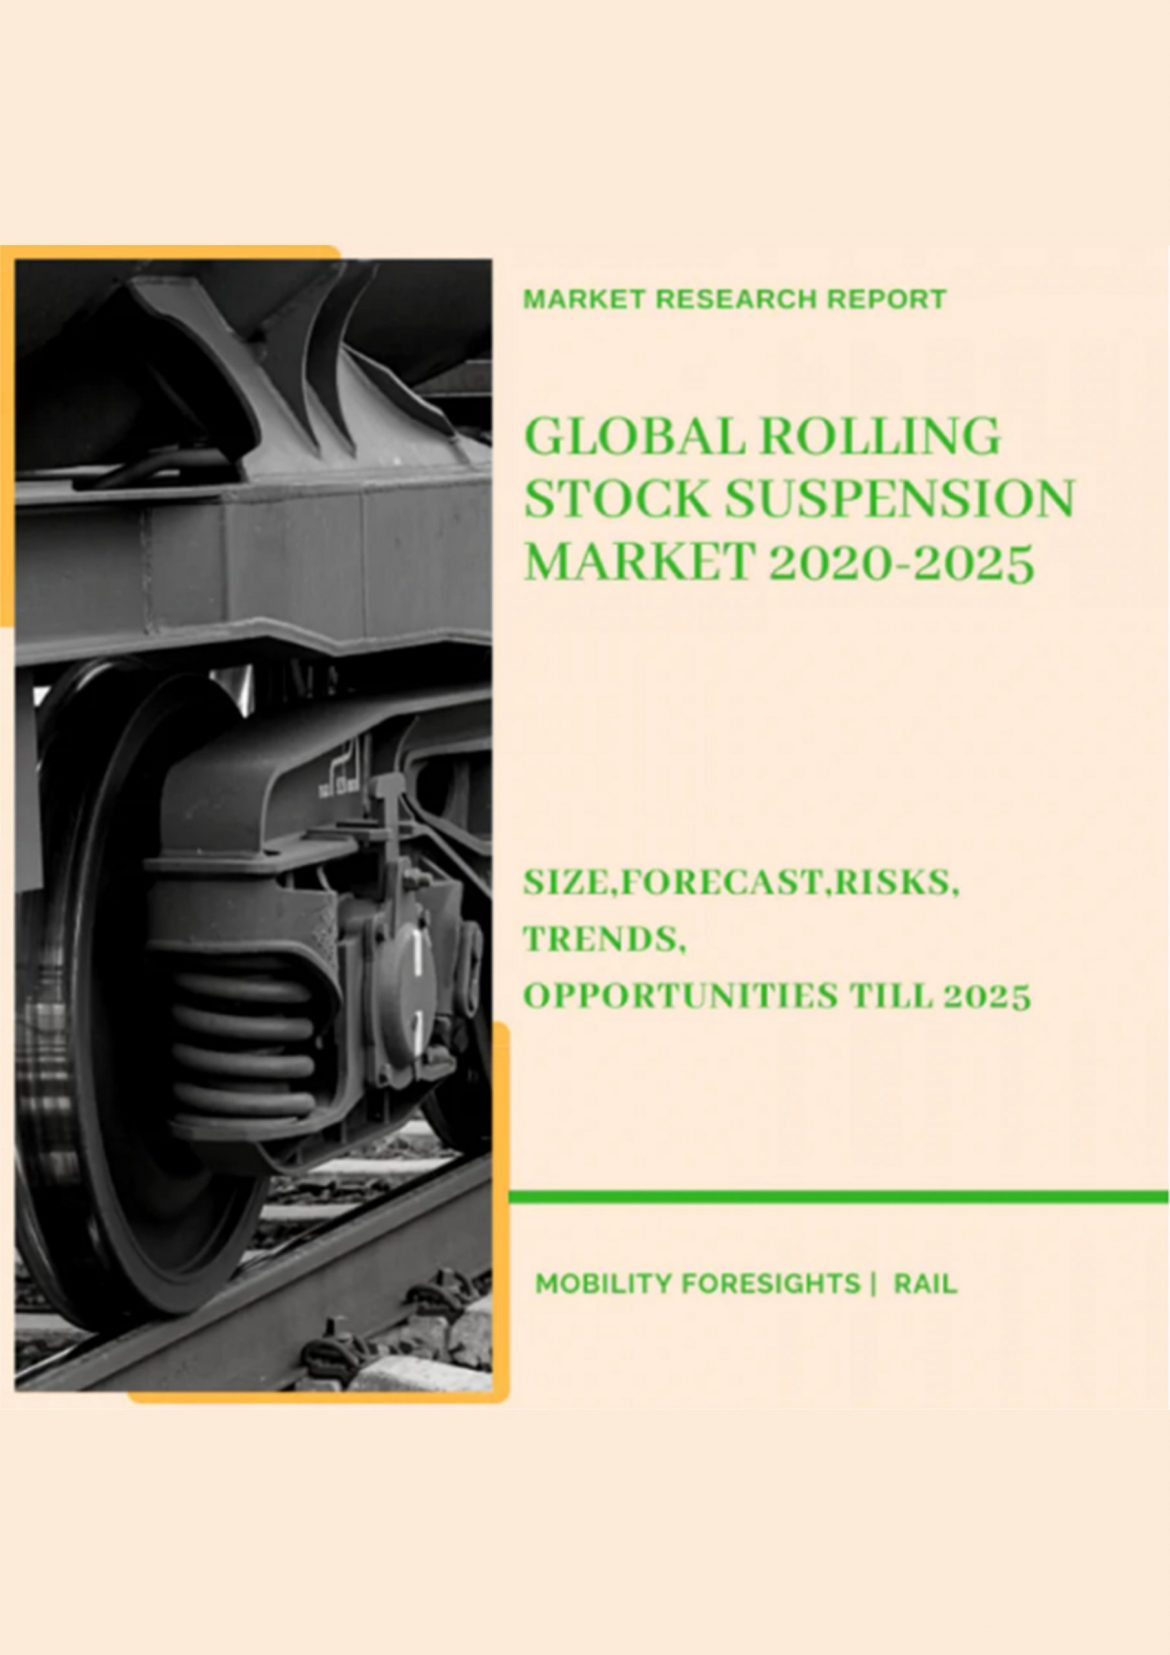 Global Rolling Stock Suspension Market 2020-2025